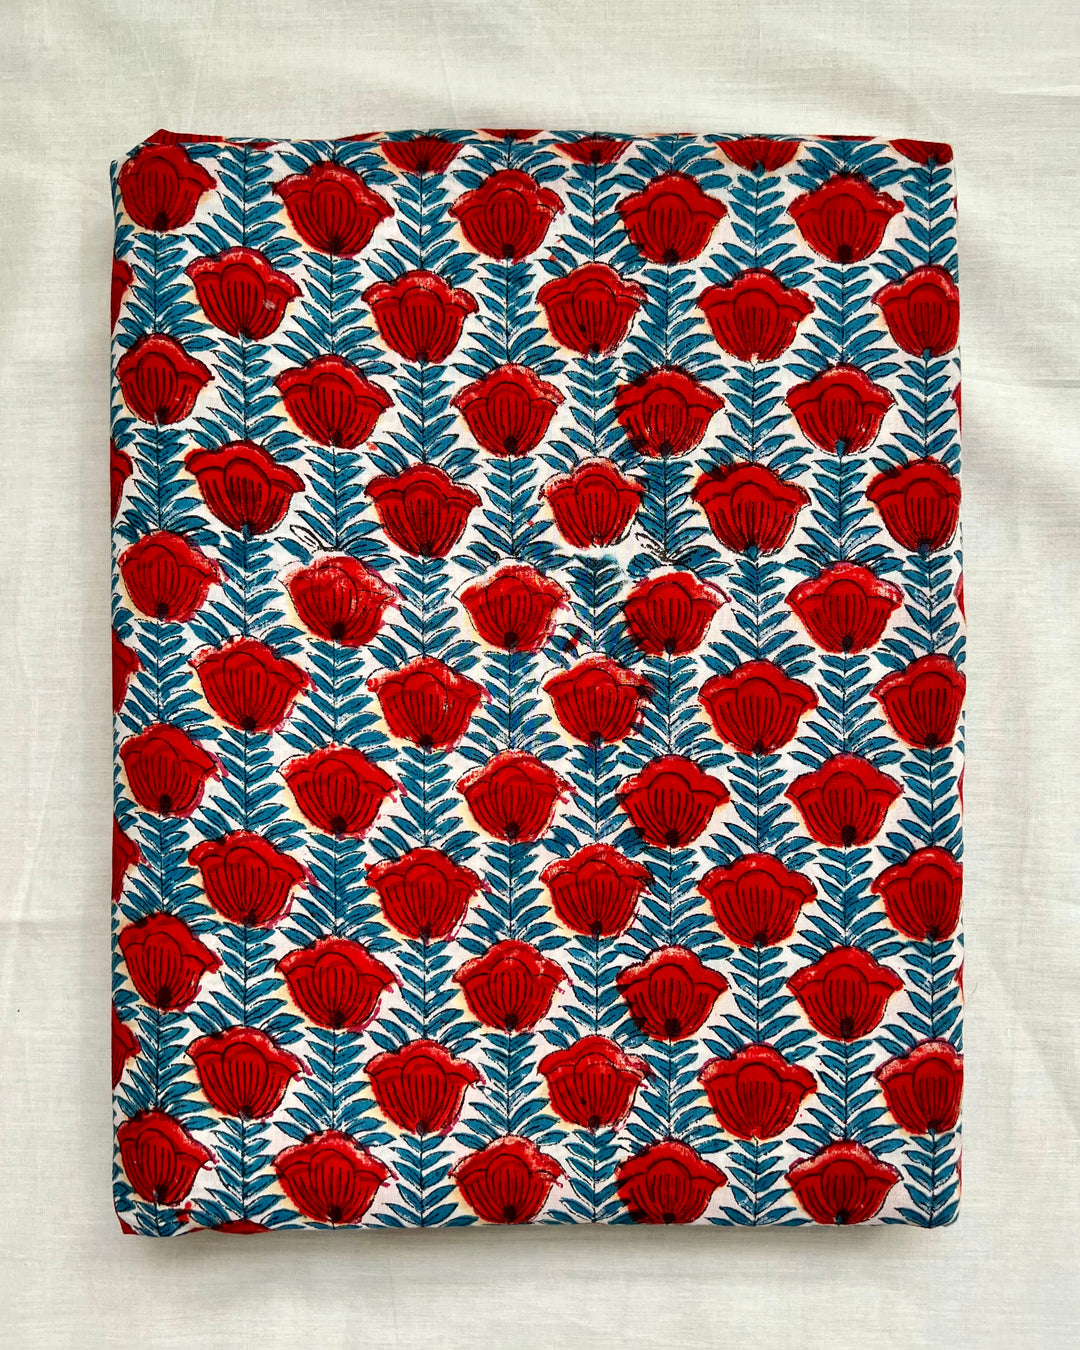 Red Poppy Leher Block Print Cotton Fabric